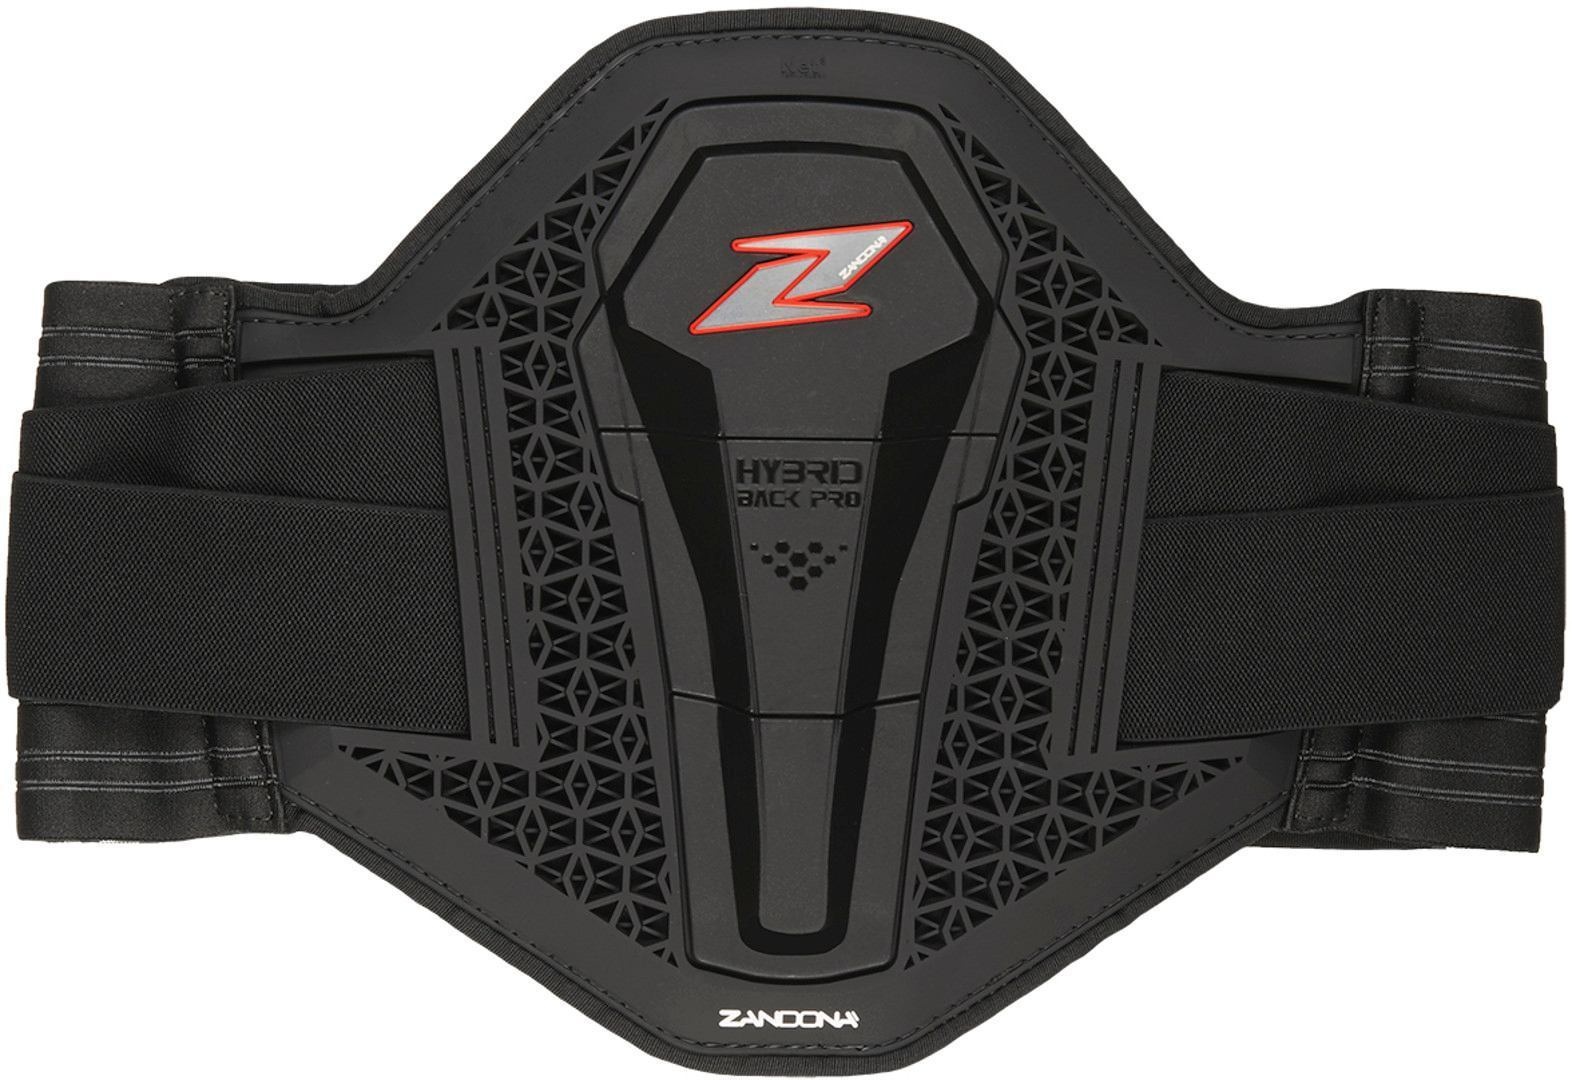 Zandona Hybrid Back Pro X3 Rugbeschermer, zwart, XL